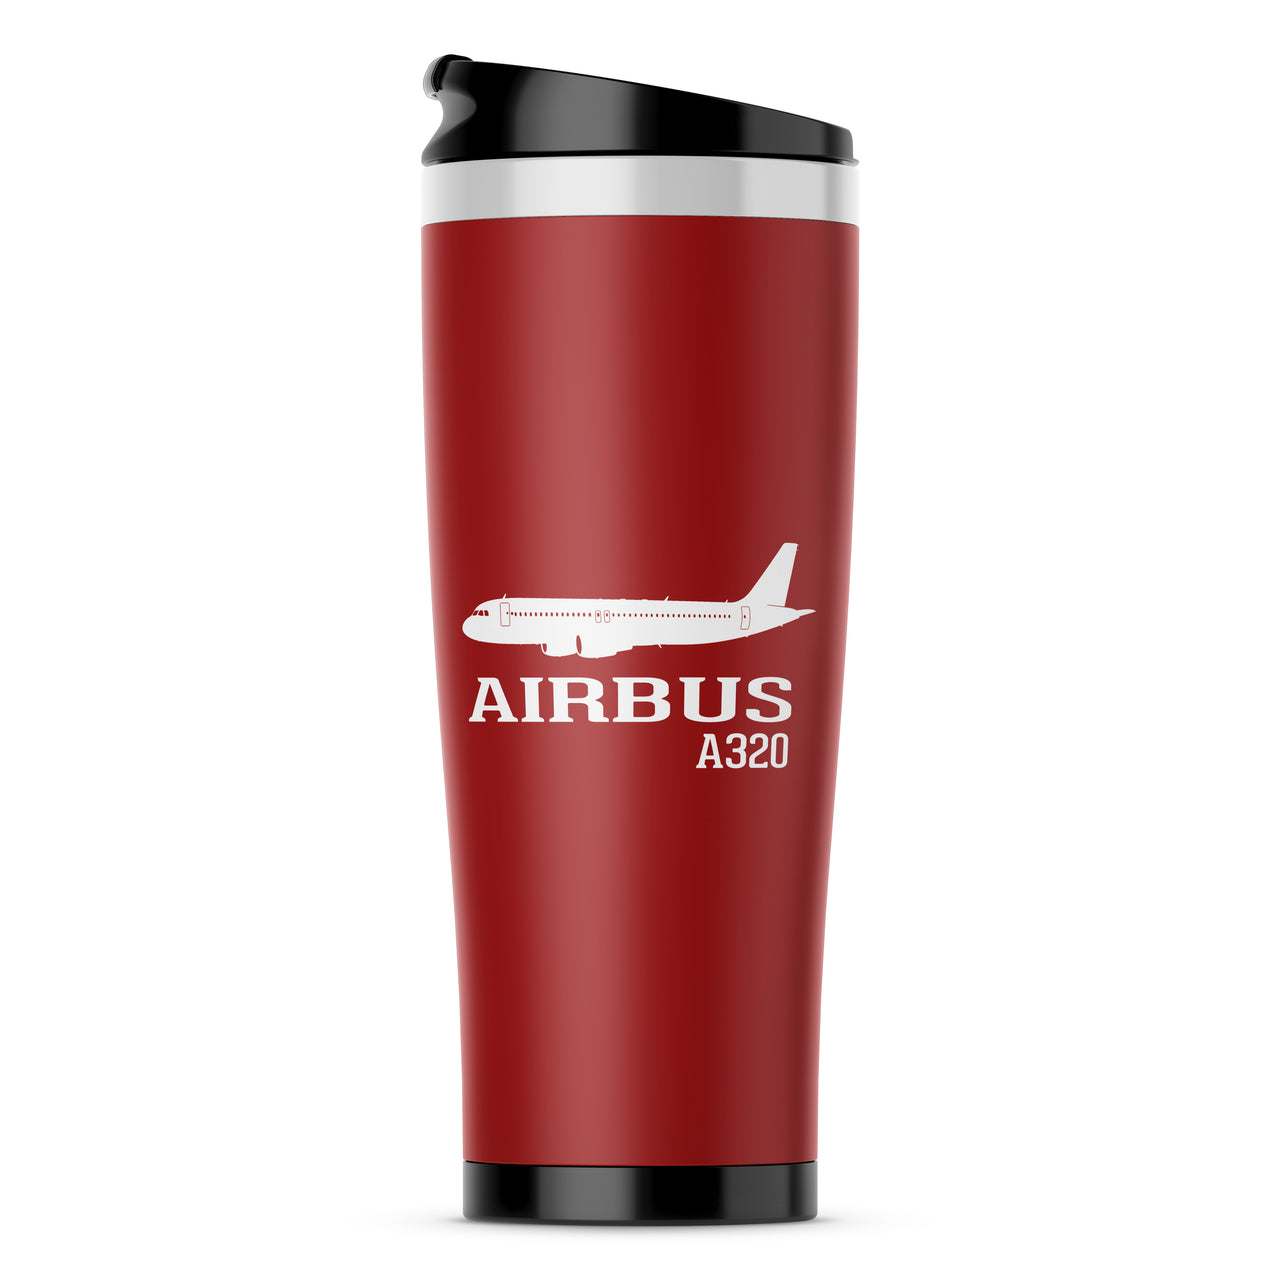 Airbus A320 Printed Designed Travel Mugs